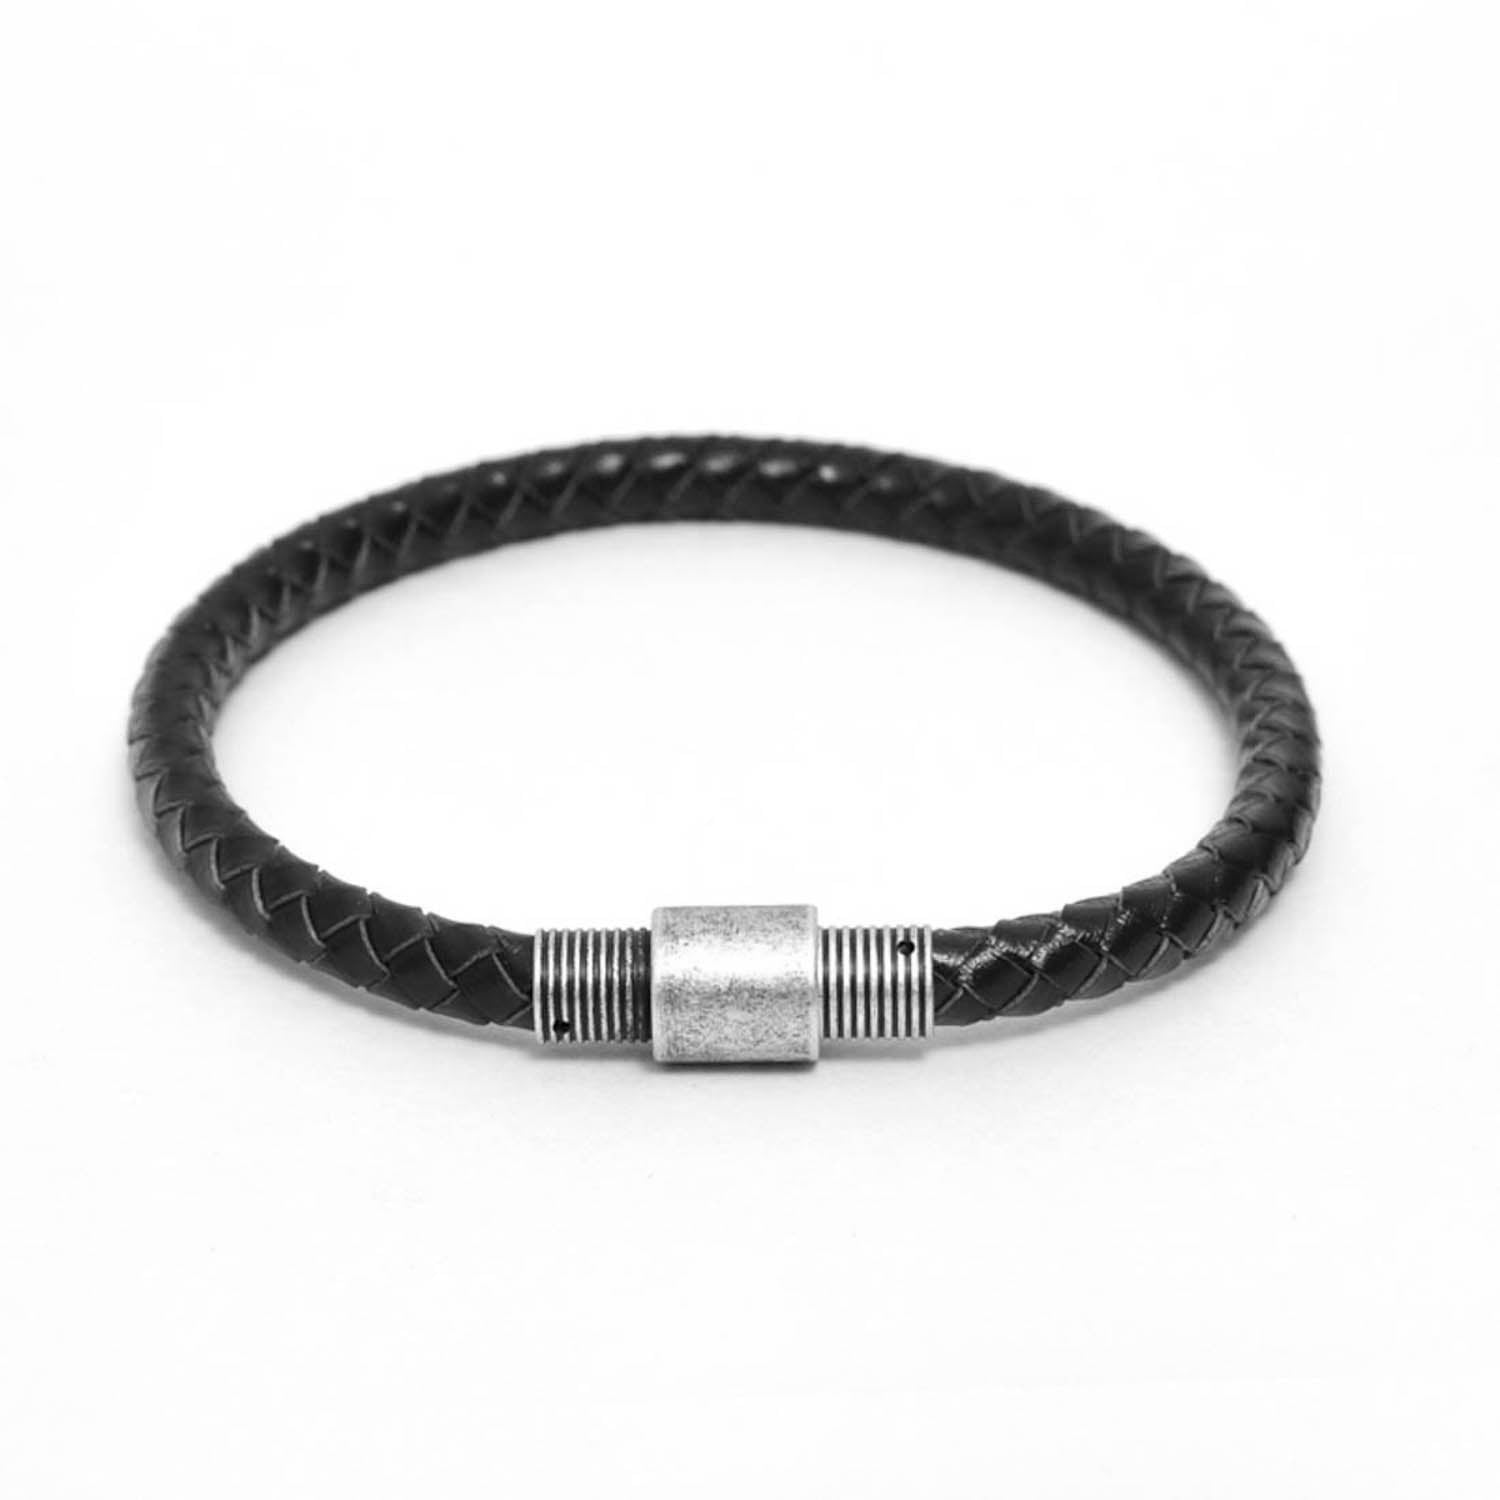 Classic 5mm Round Braided Black Leather Bracelet